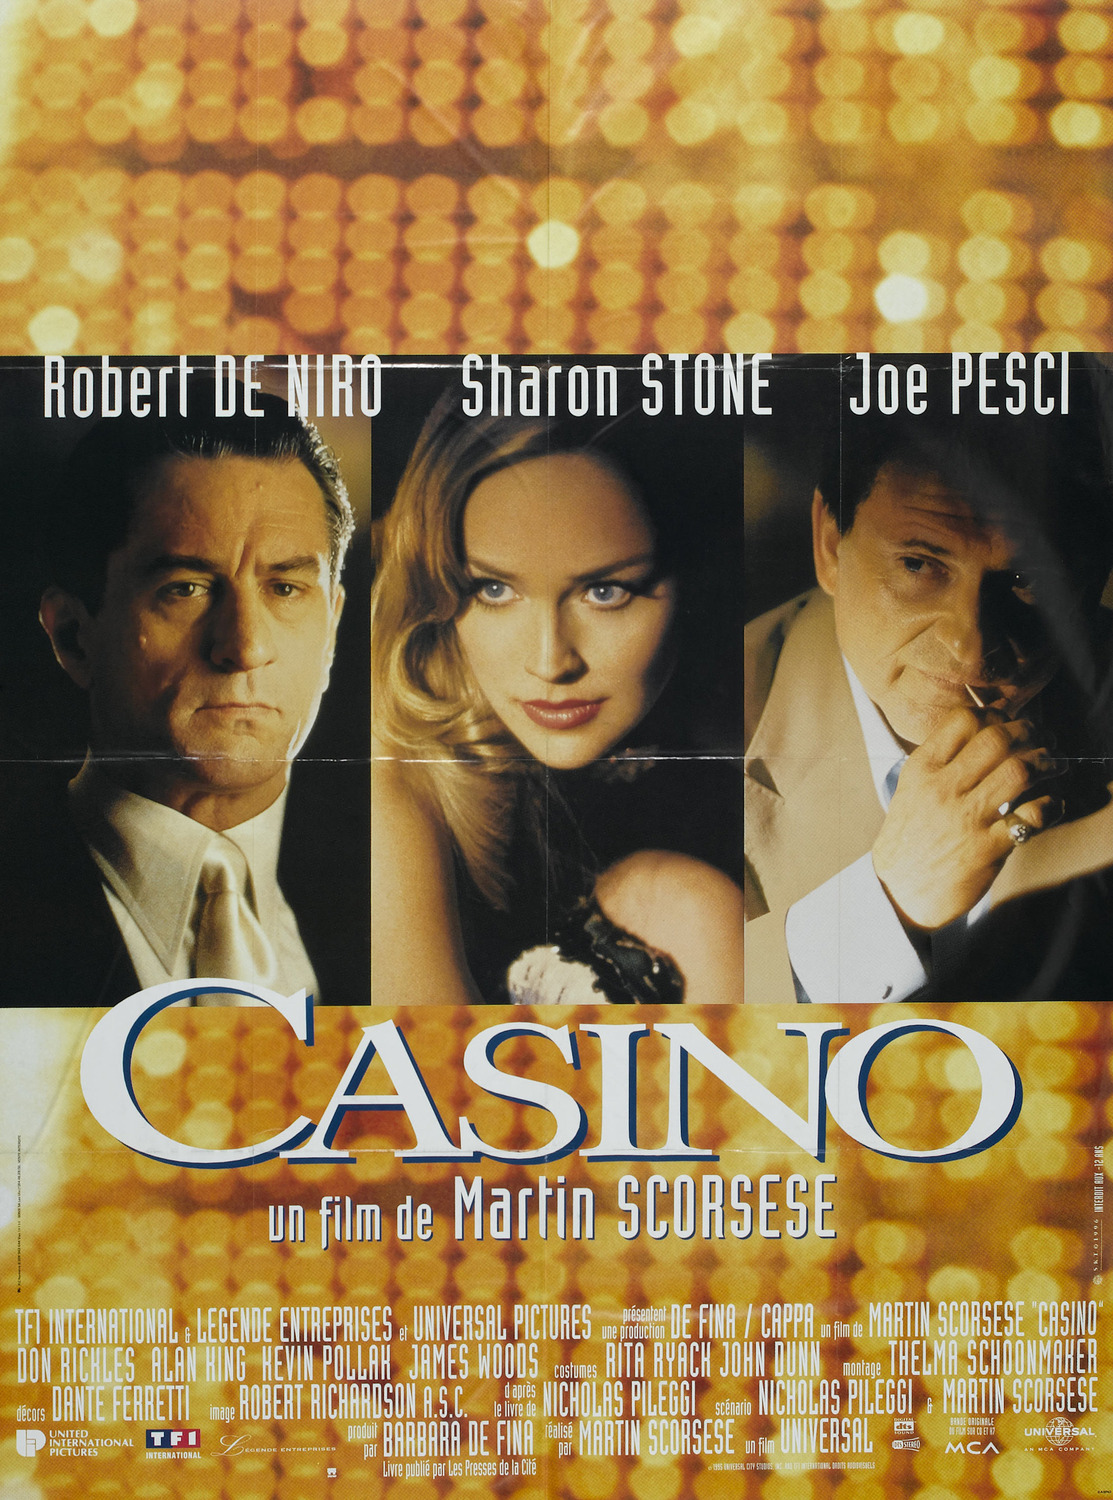 movie poster casino